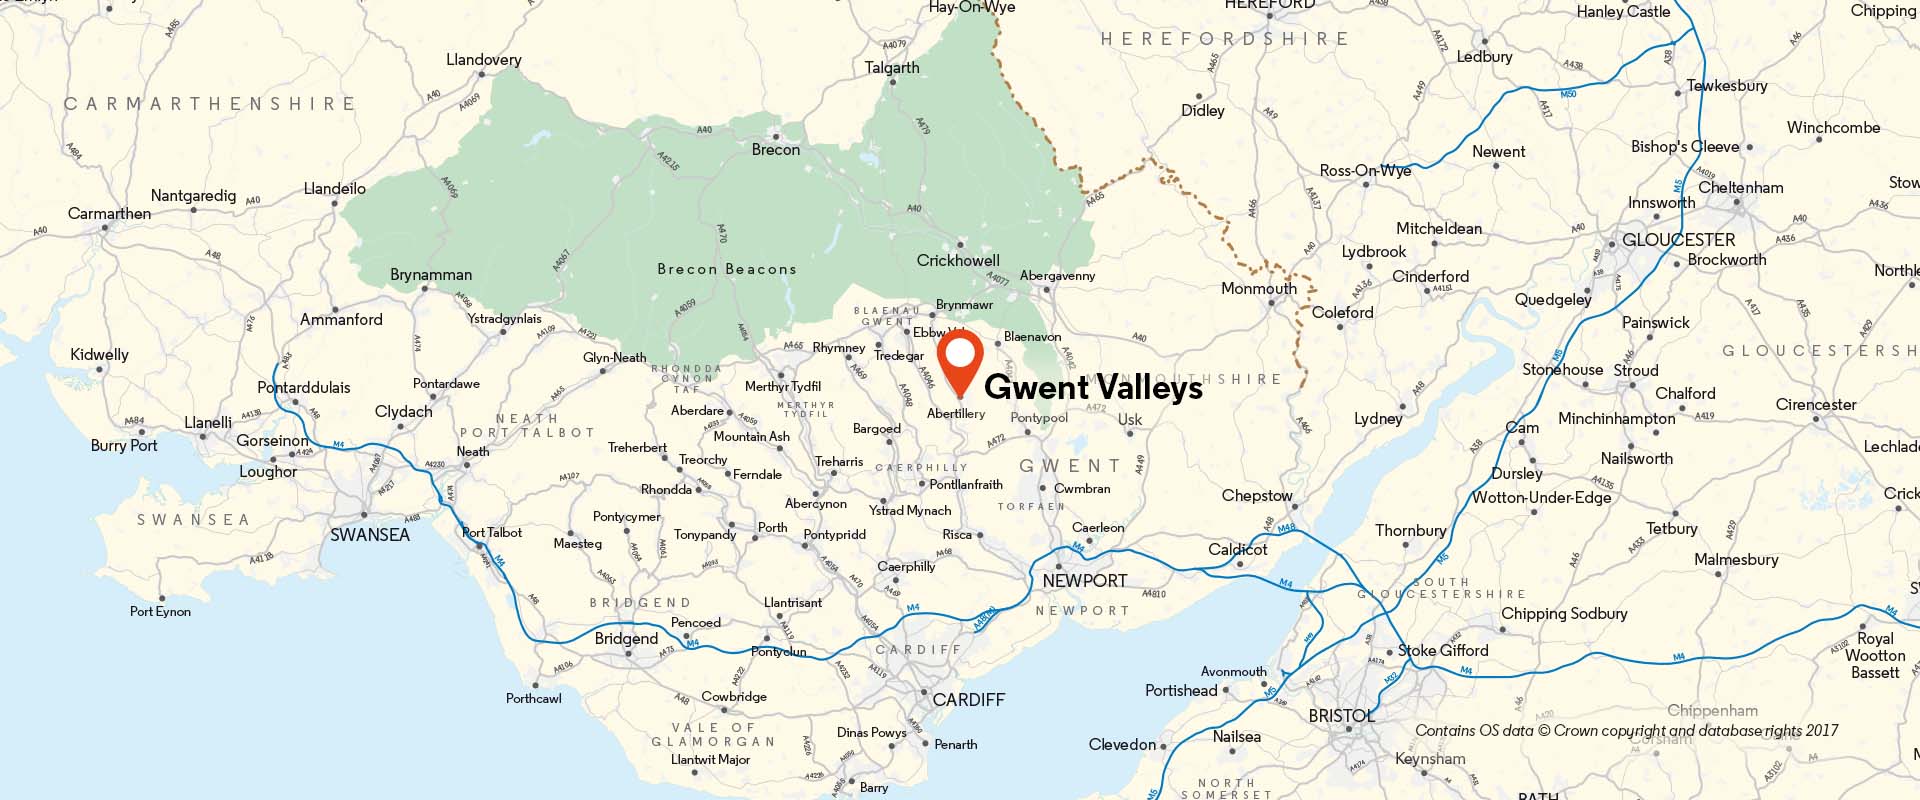 Gwent Valleys CoM